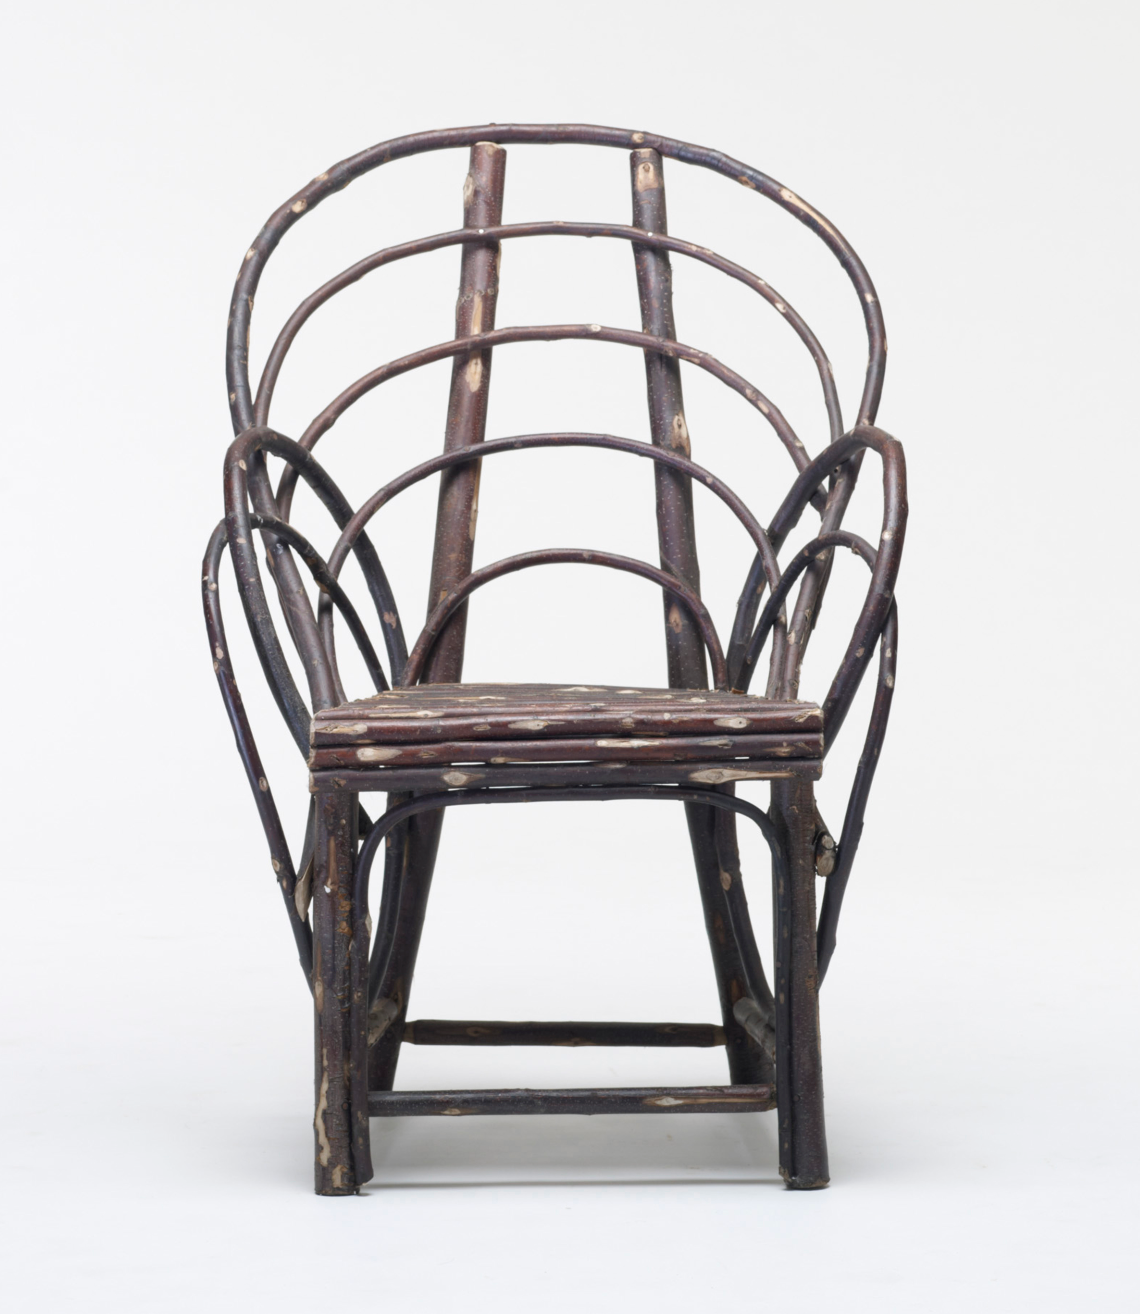 [Chair] Bent Wood Chair, France, ca. 1990